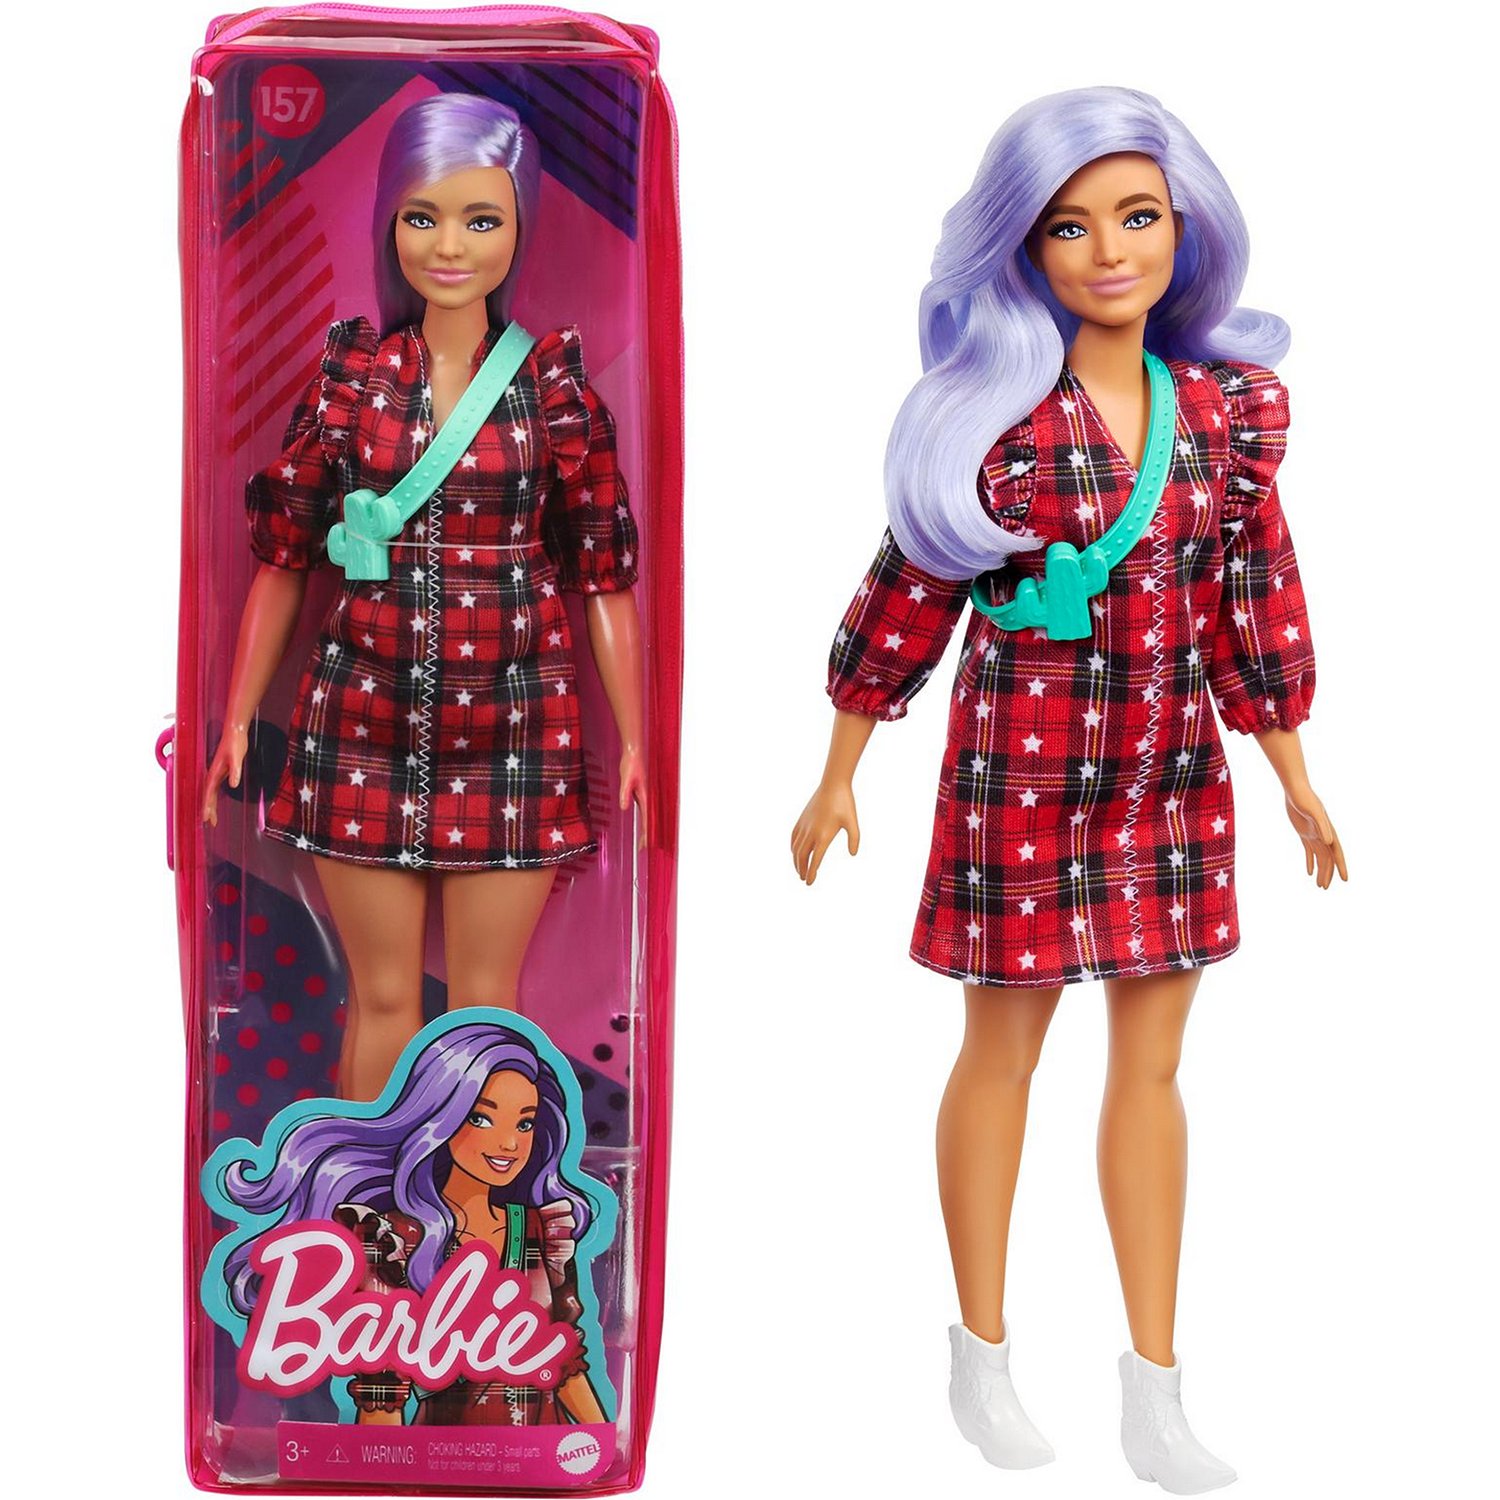 Кукла Barbie Игра с модой 157 GRB49 - фото 9